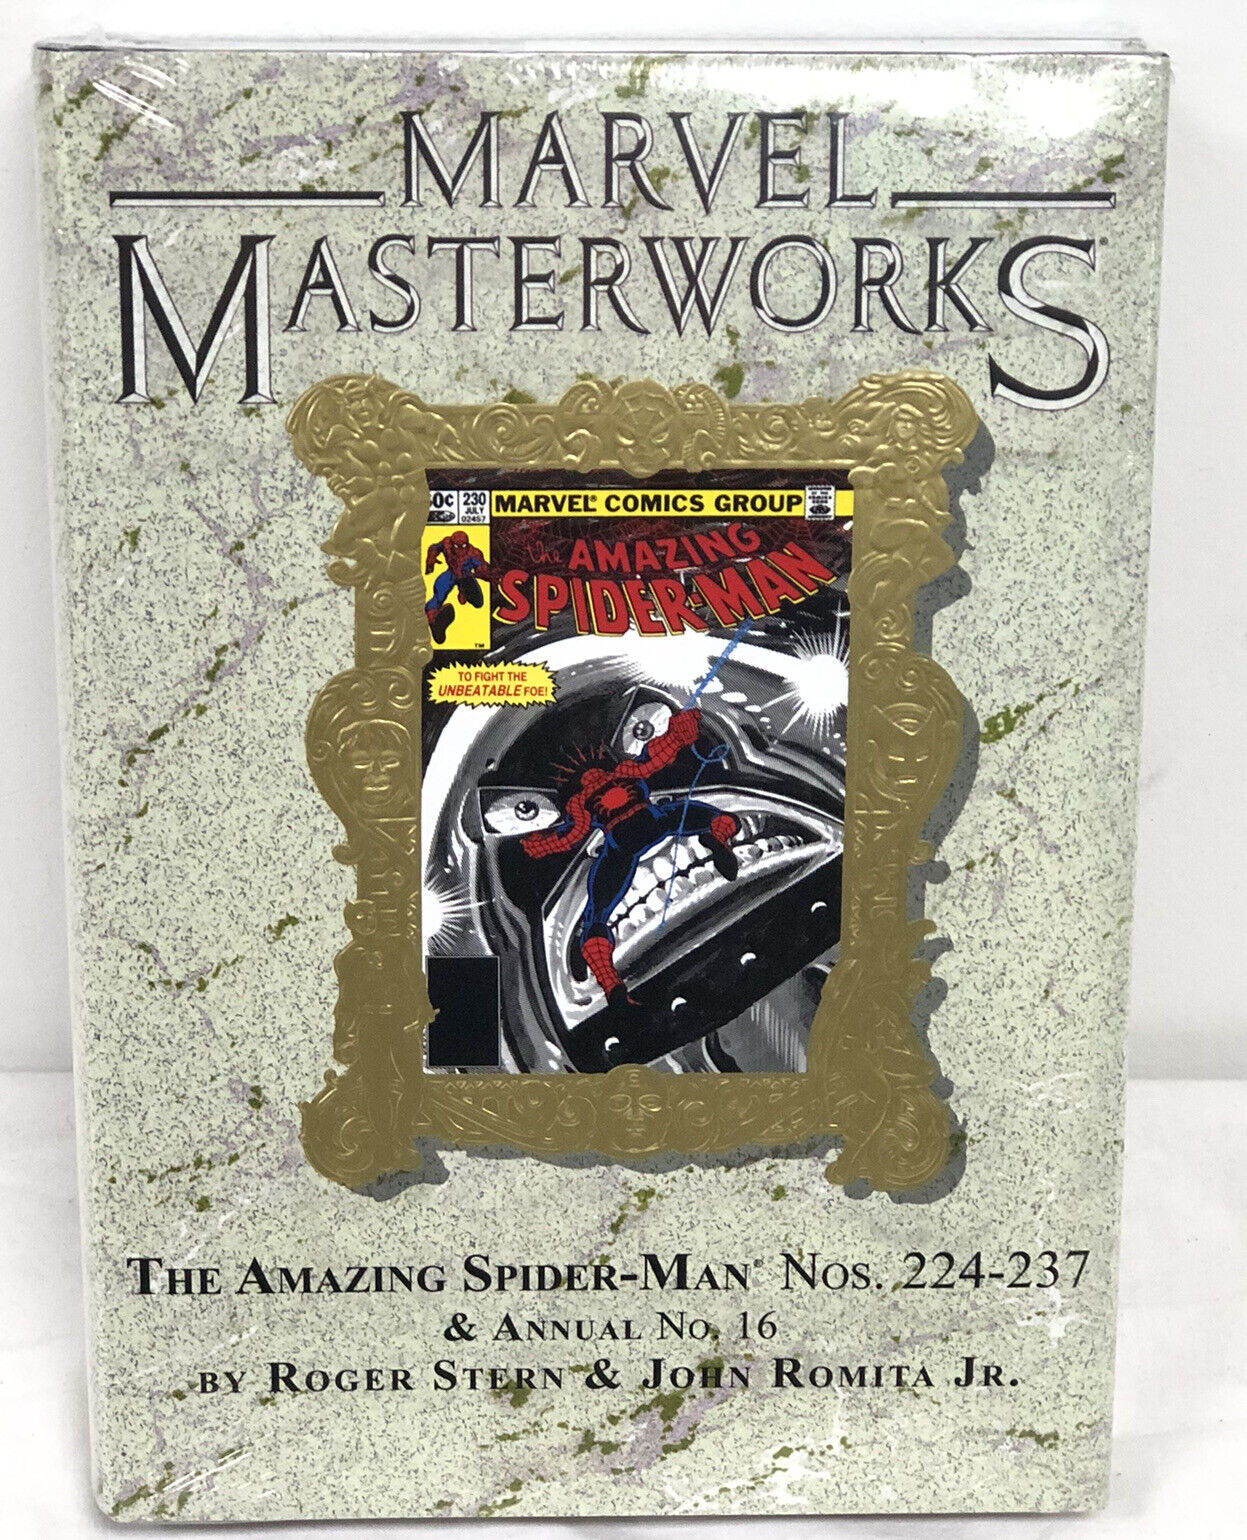 Amazing Spider-Man Vol 22 Marvel Masterworks Vol 293 HC DM Var New Sealed $100